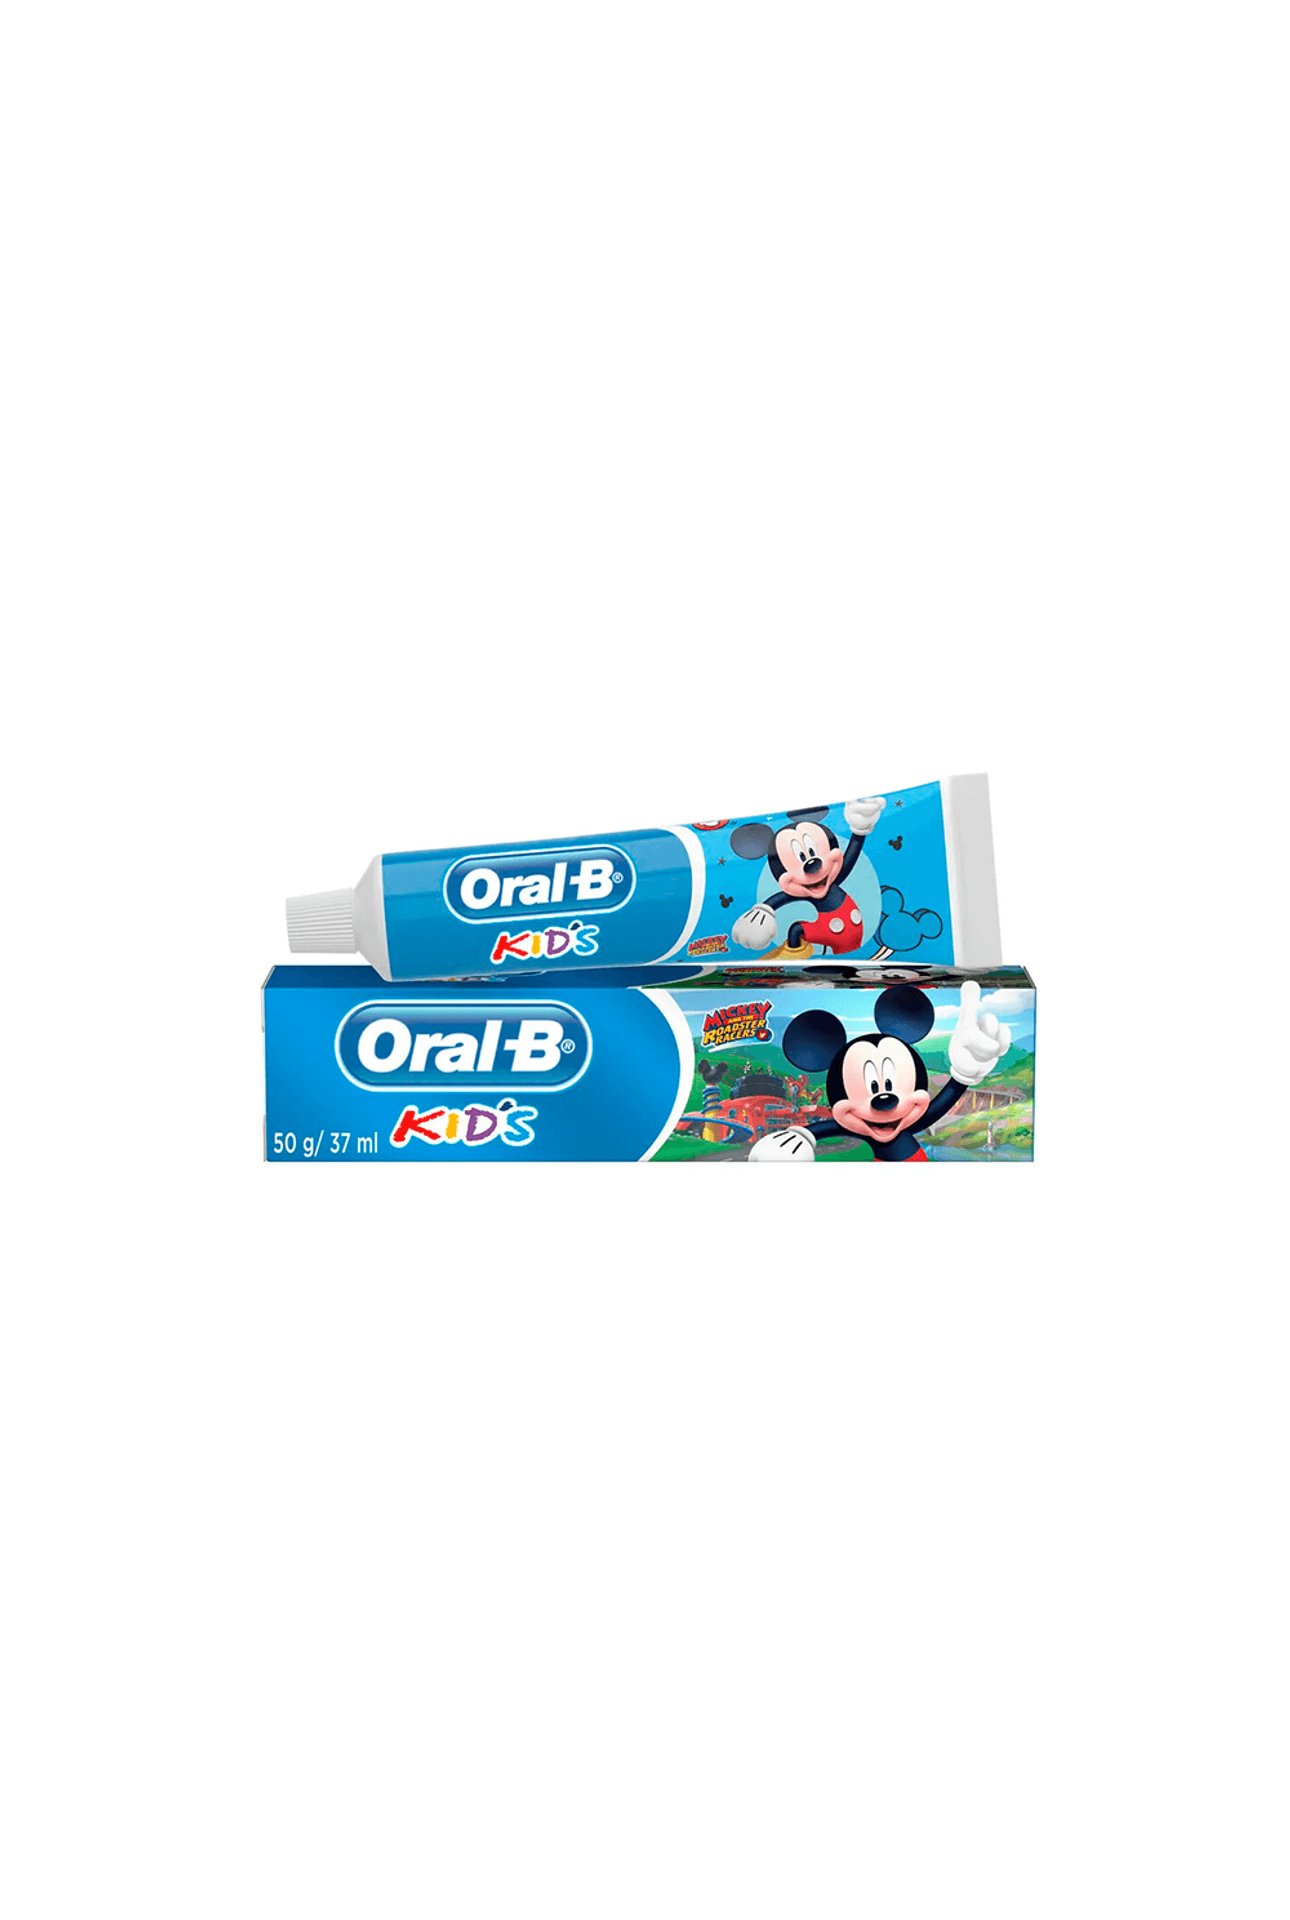 Hilo Dental Oral-B Essential Floss 2 x 25m - farmaciasdelpueblo